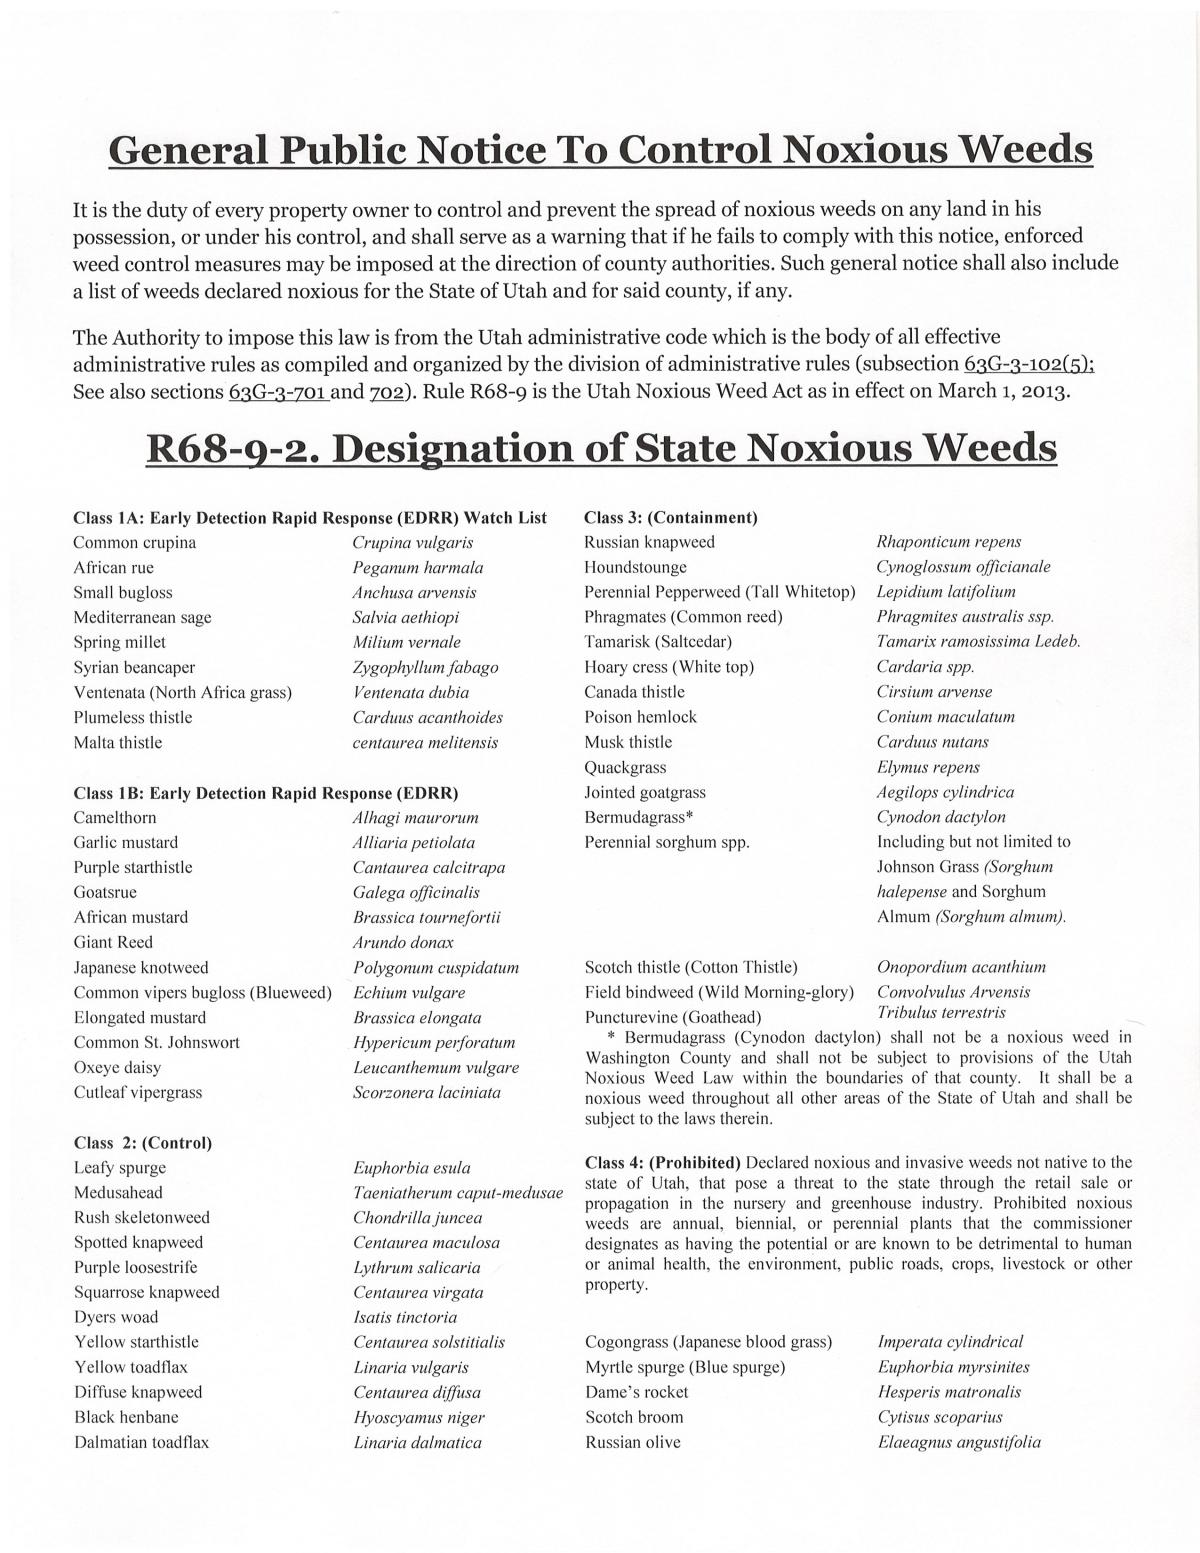 General Public Notice to Control Noxious Weeds